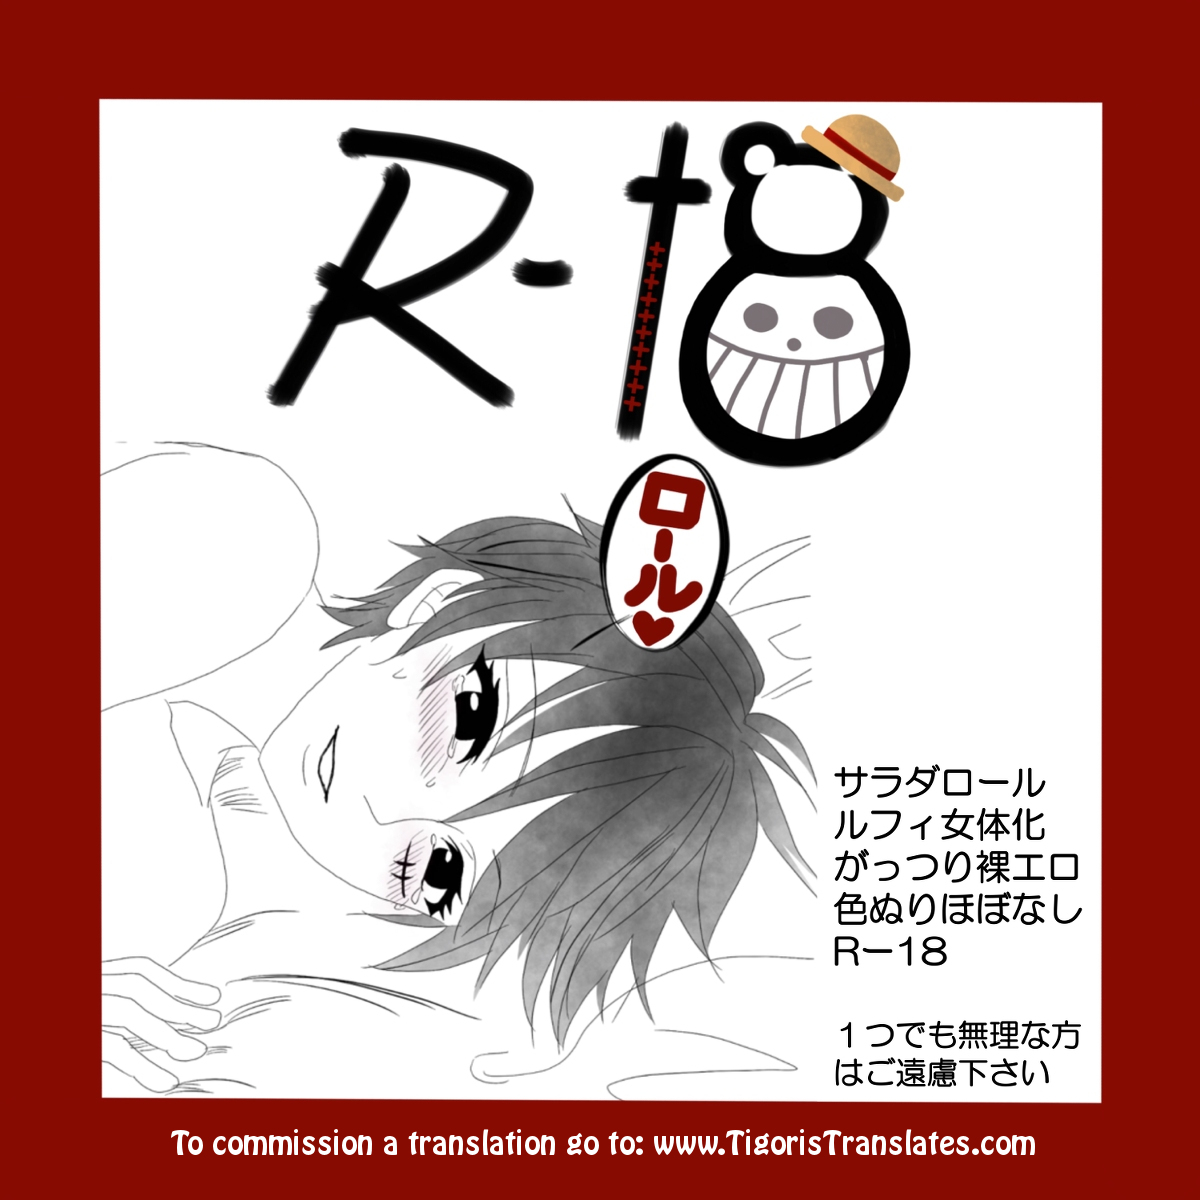 Salad roll reunion story Sequel R 18 One Piece English Tigoris Translates00